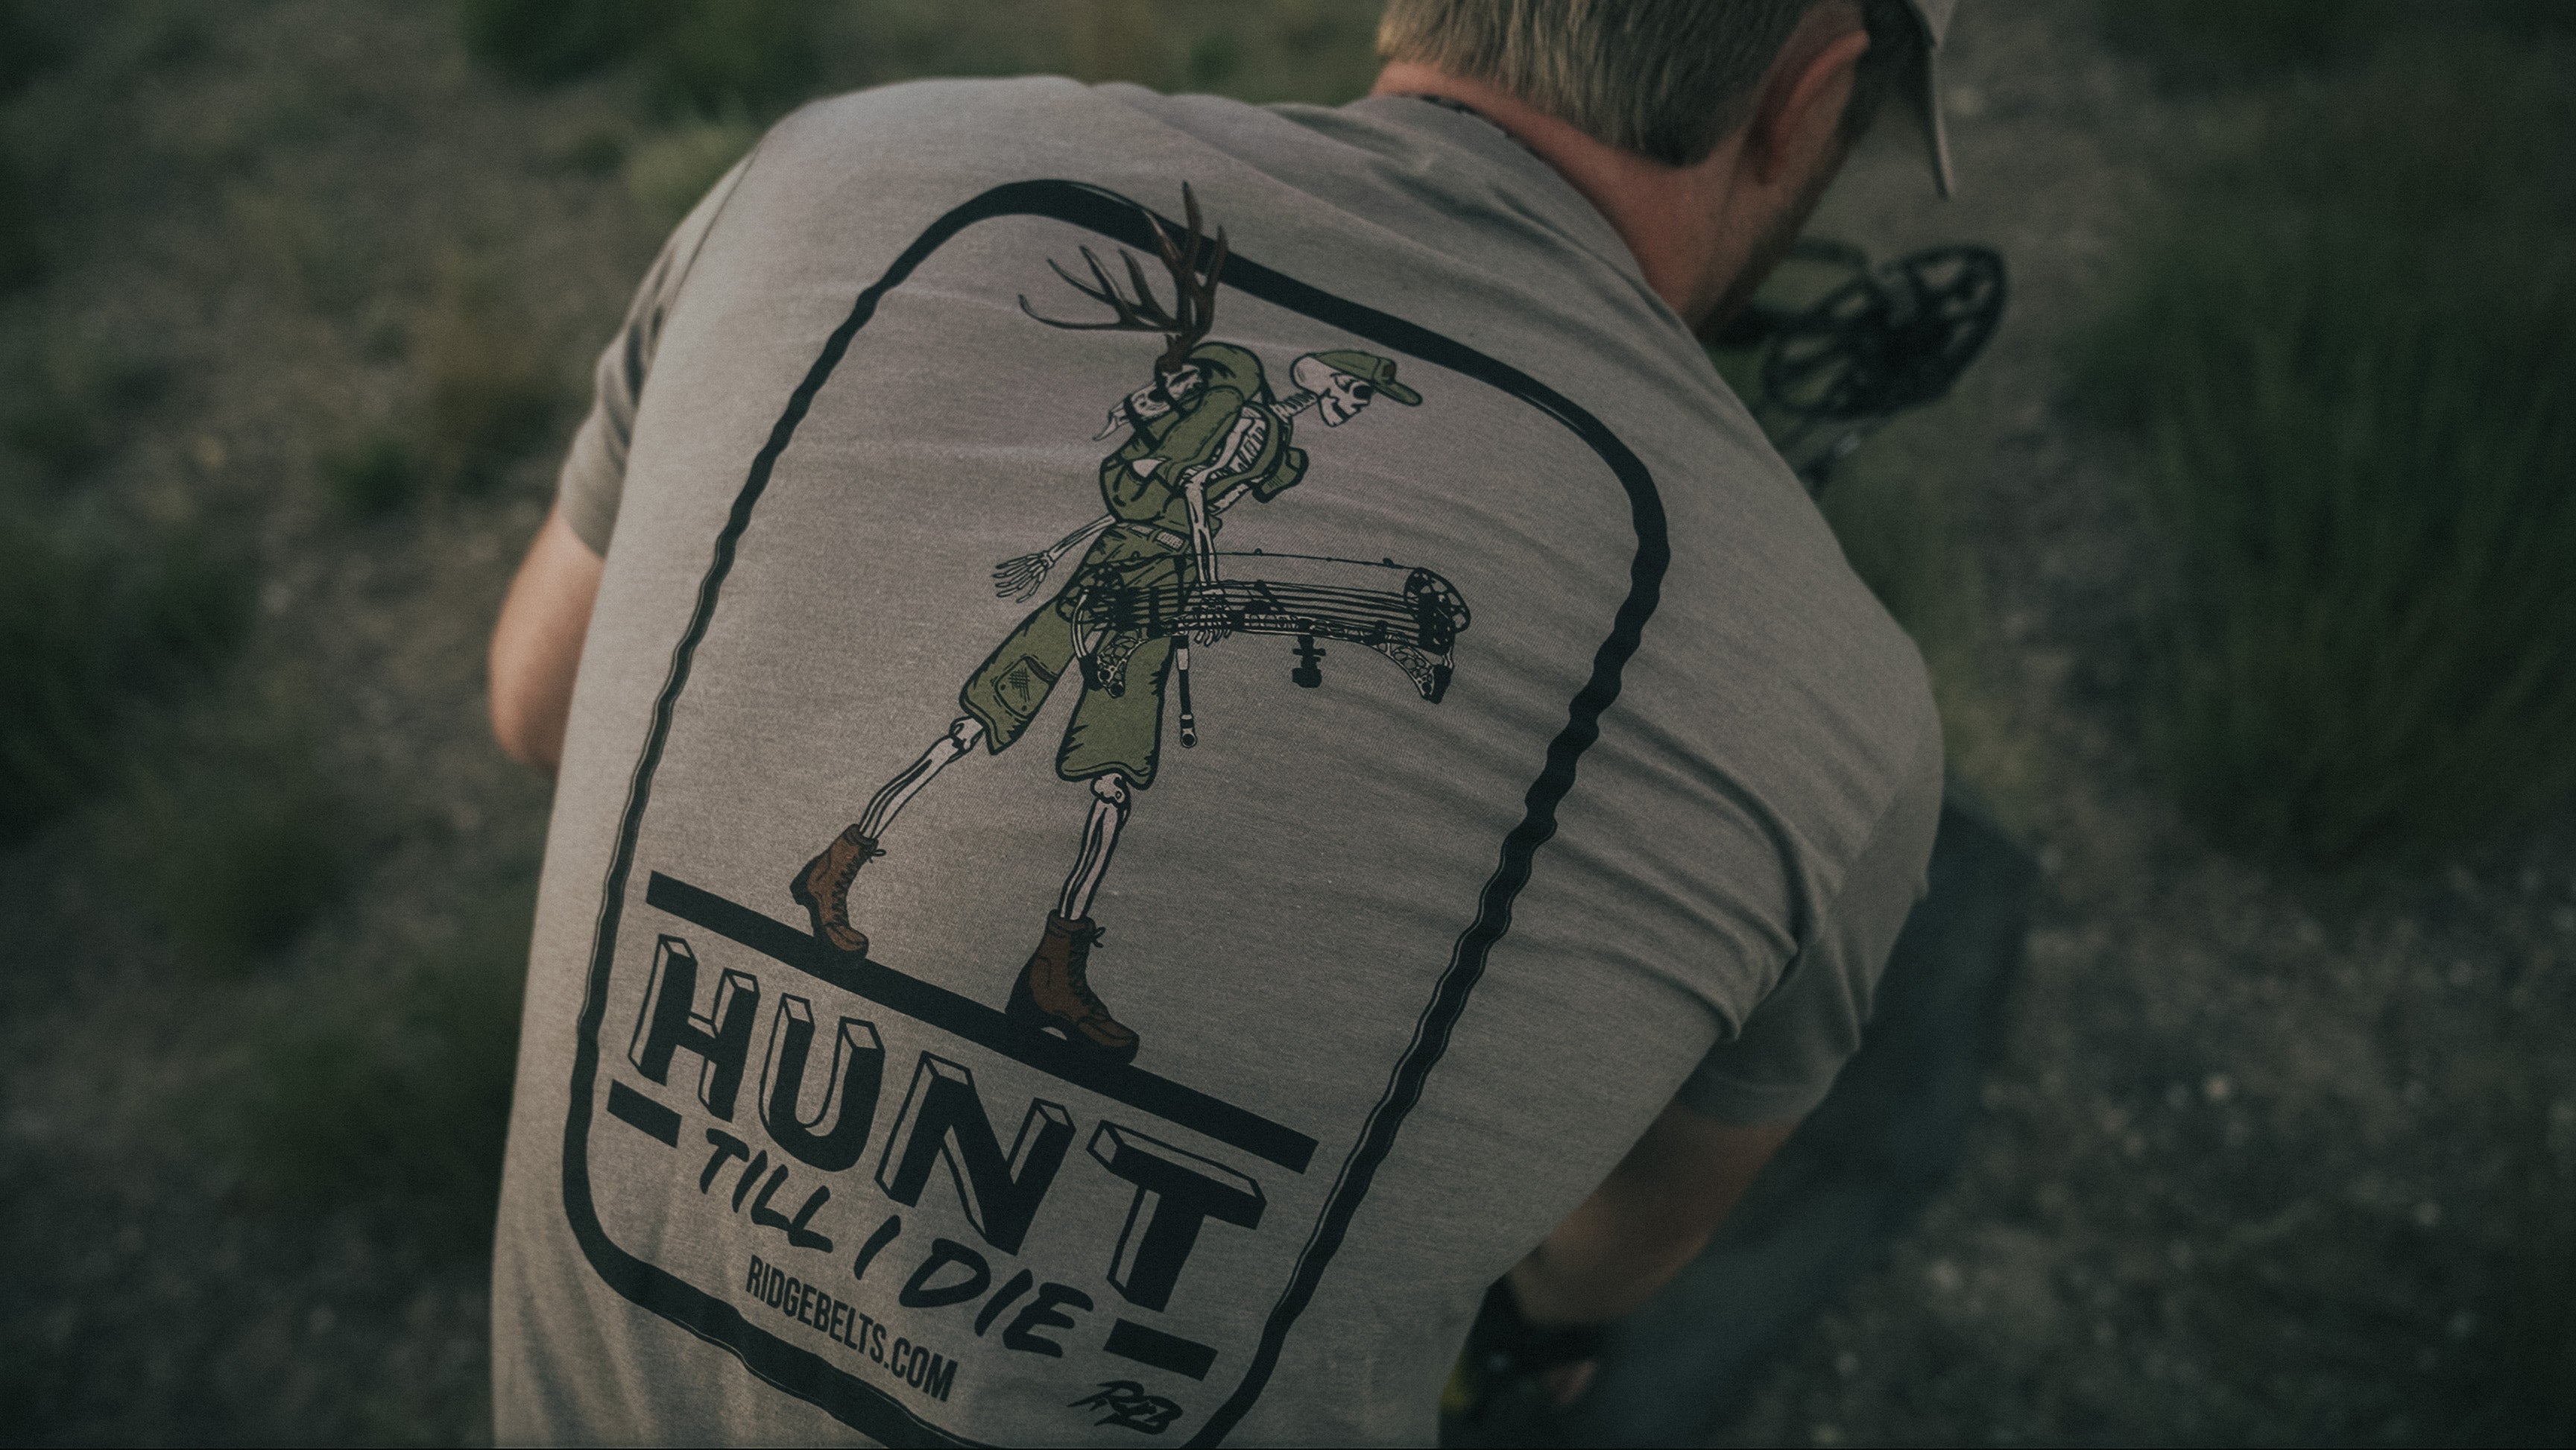 Bow hunting shirt. Skeleton hunting shirt design. Hunt till I die shirt from Ridge Belts